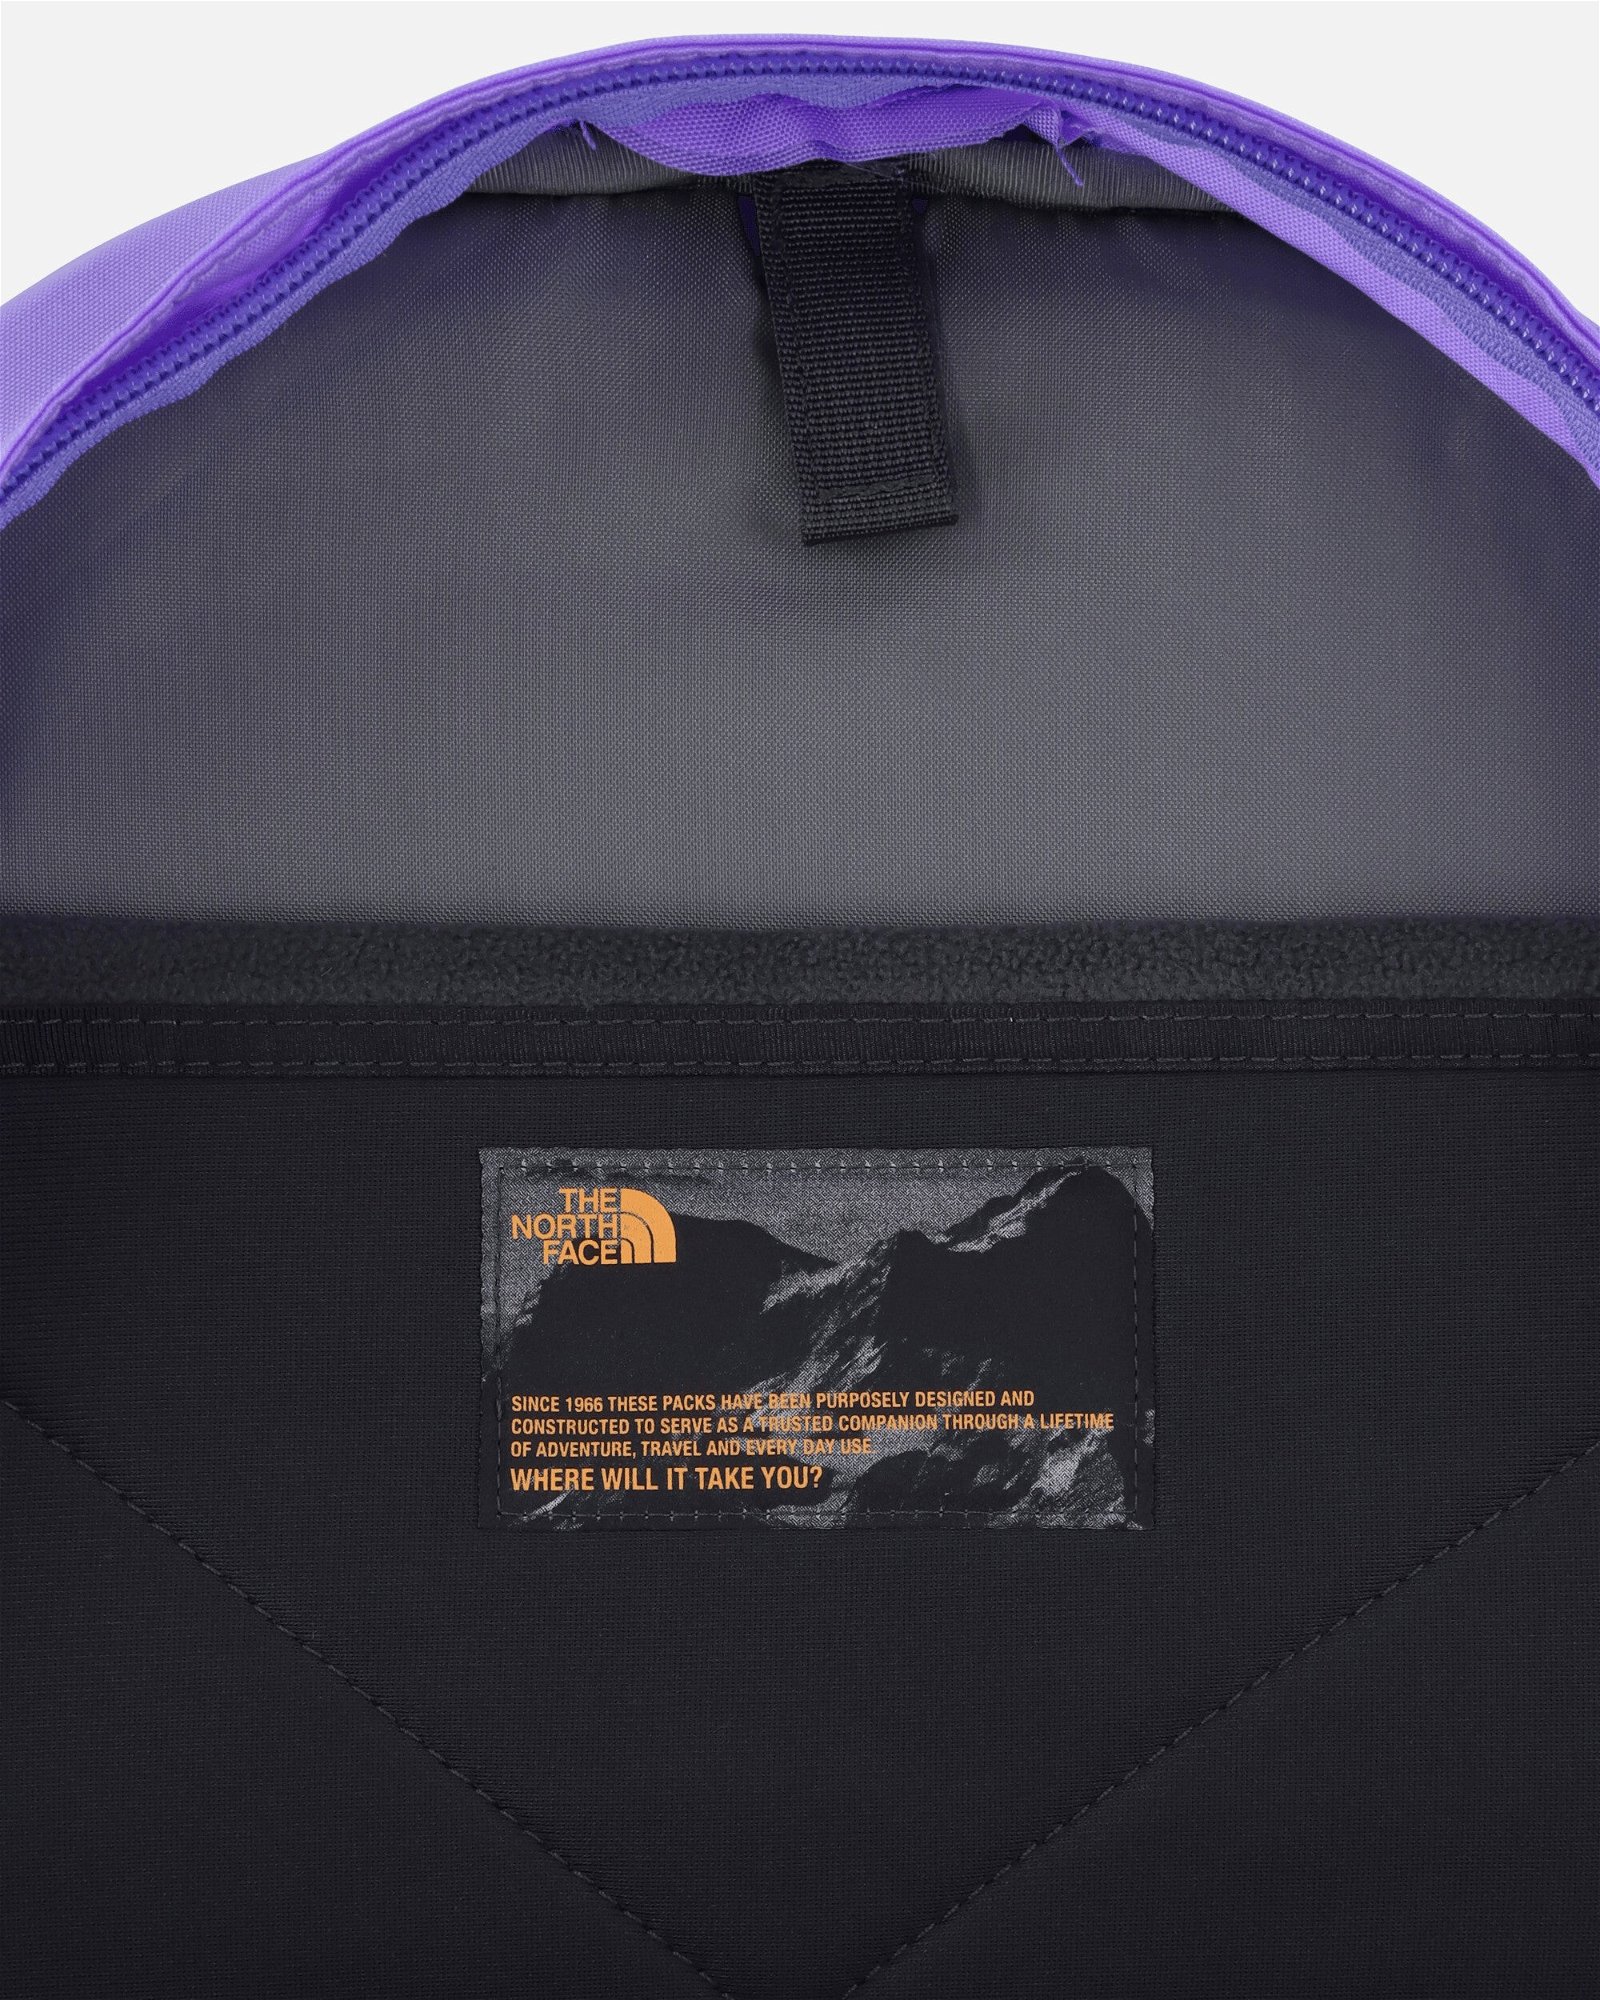 Borealis Classic Backpack Optic Violet